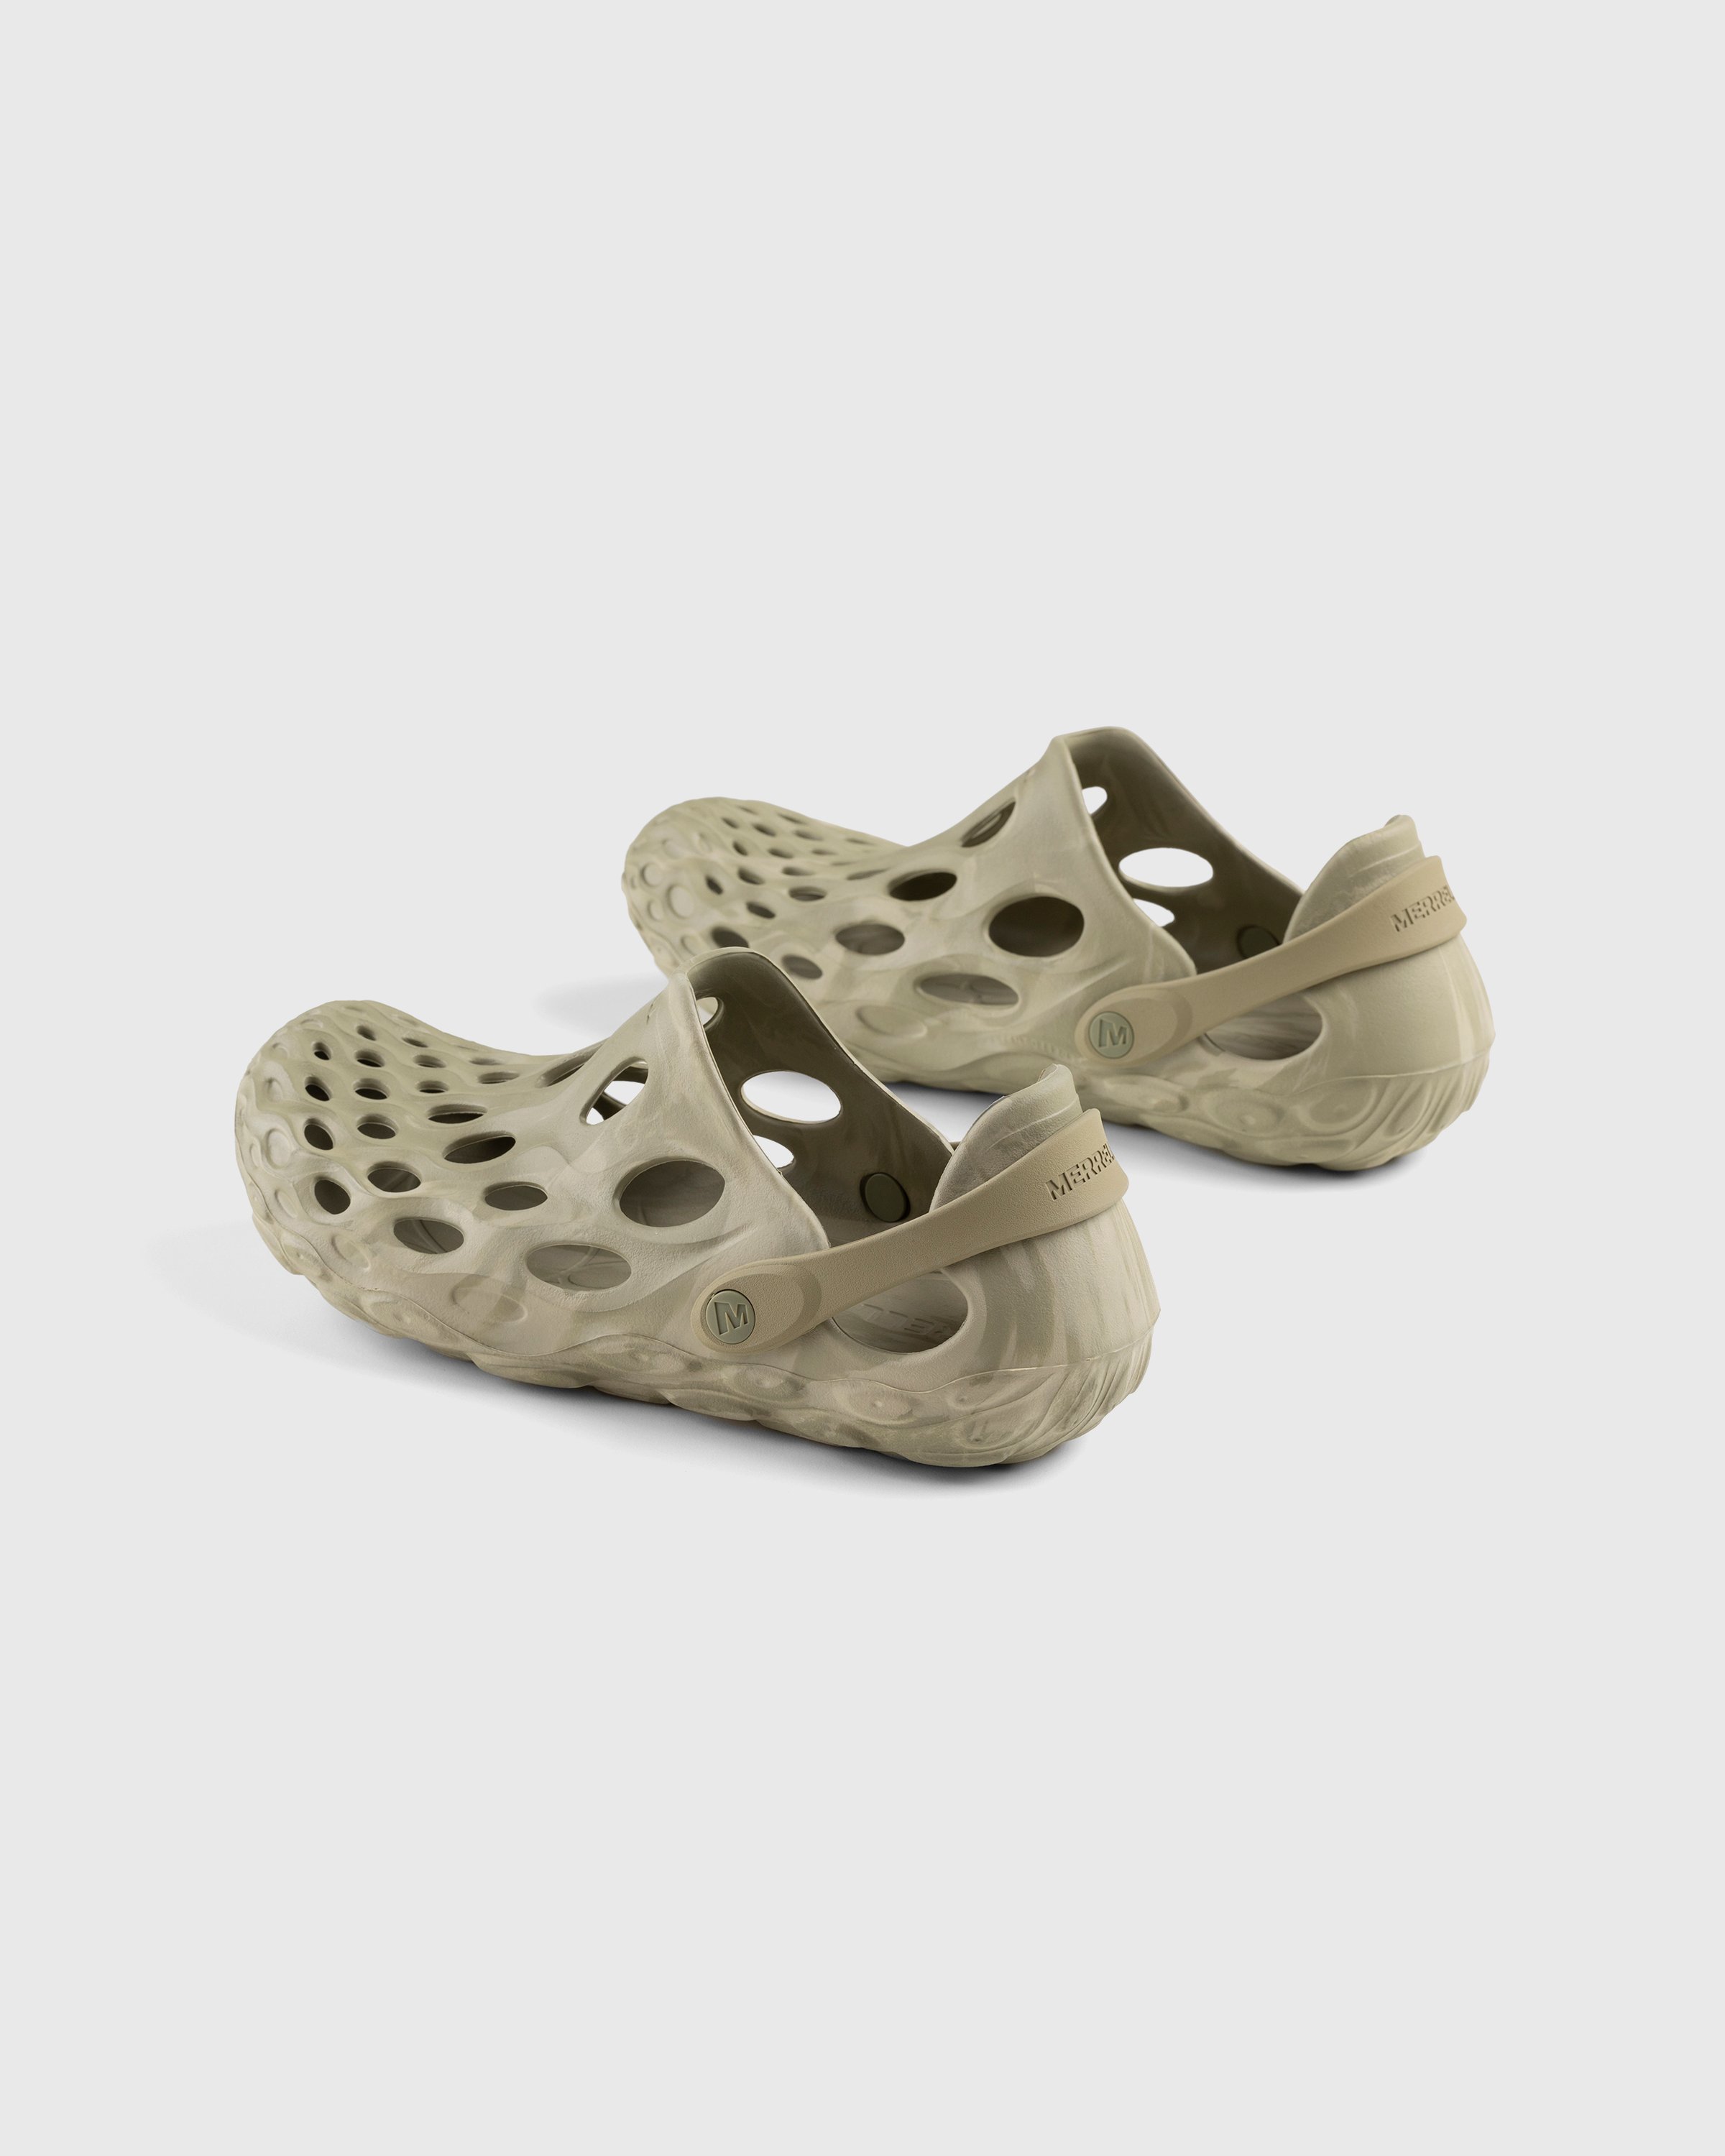 Merrell - Hydro Moc Herb - Footwear - Green - Image 3